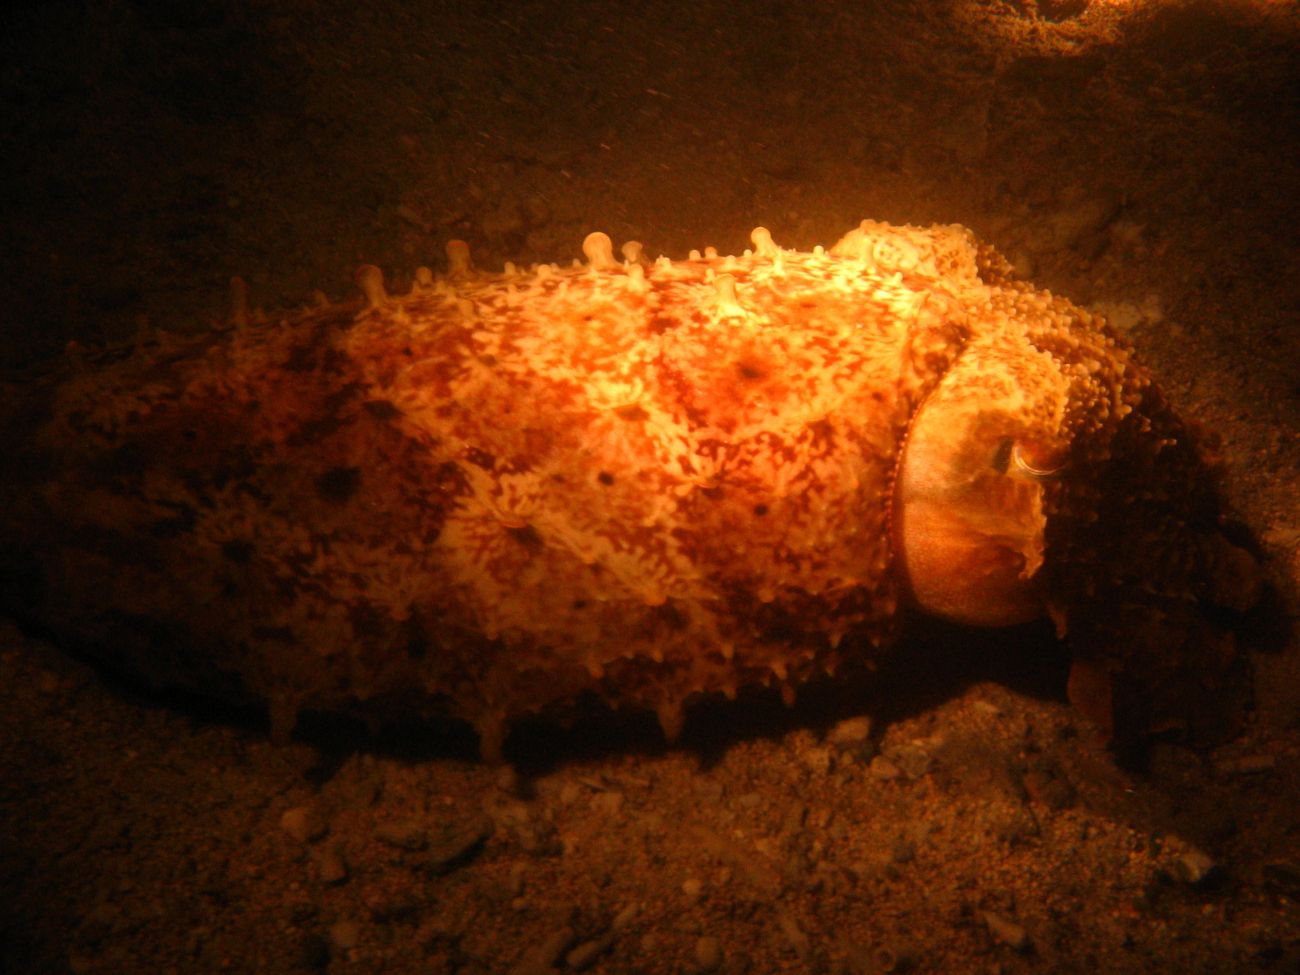 A cuttlefish at night